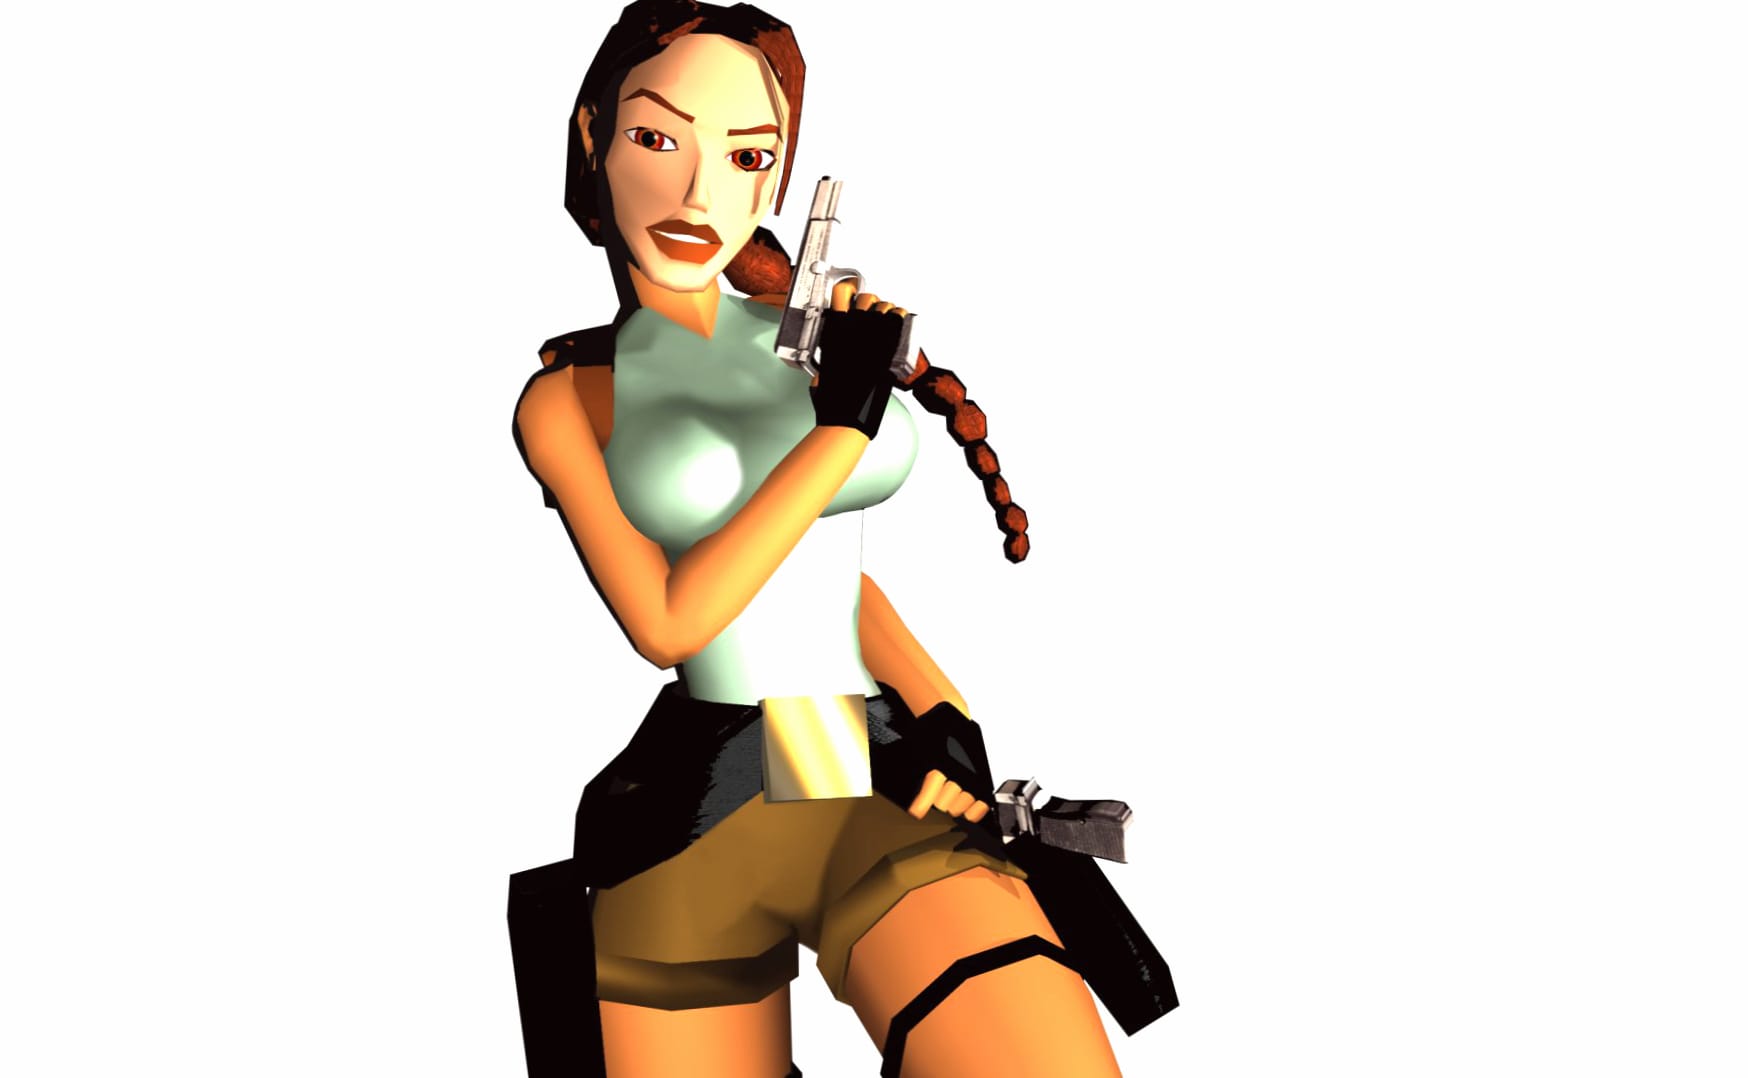 Tomb Raider II at 1024 x 1024 iPad size wallpapers HD quality